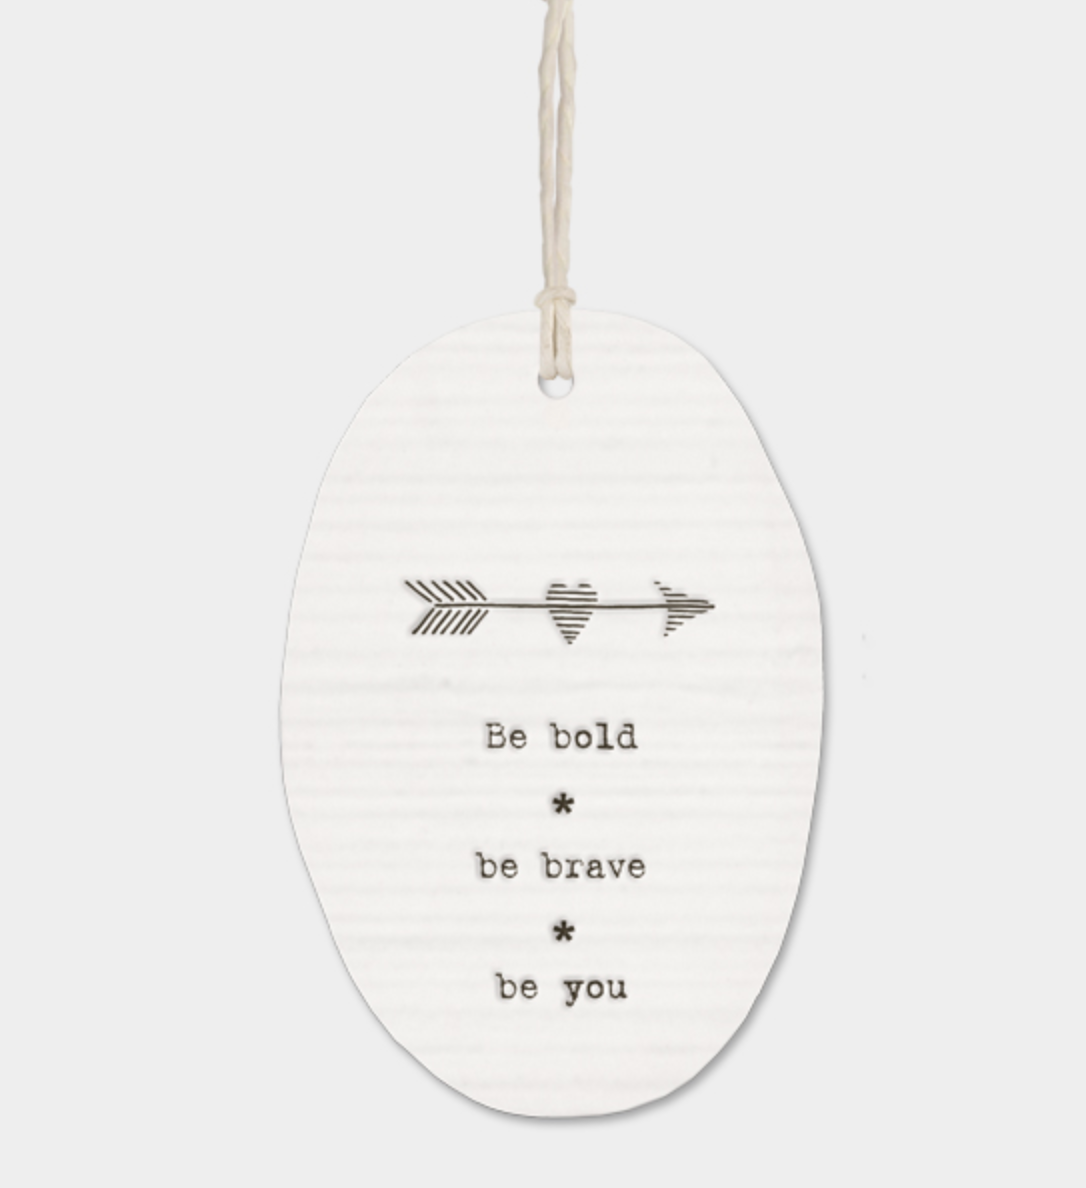 East of India Porcelain Oval Message Hanger - "Be bold..."